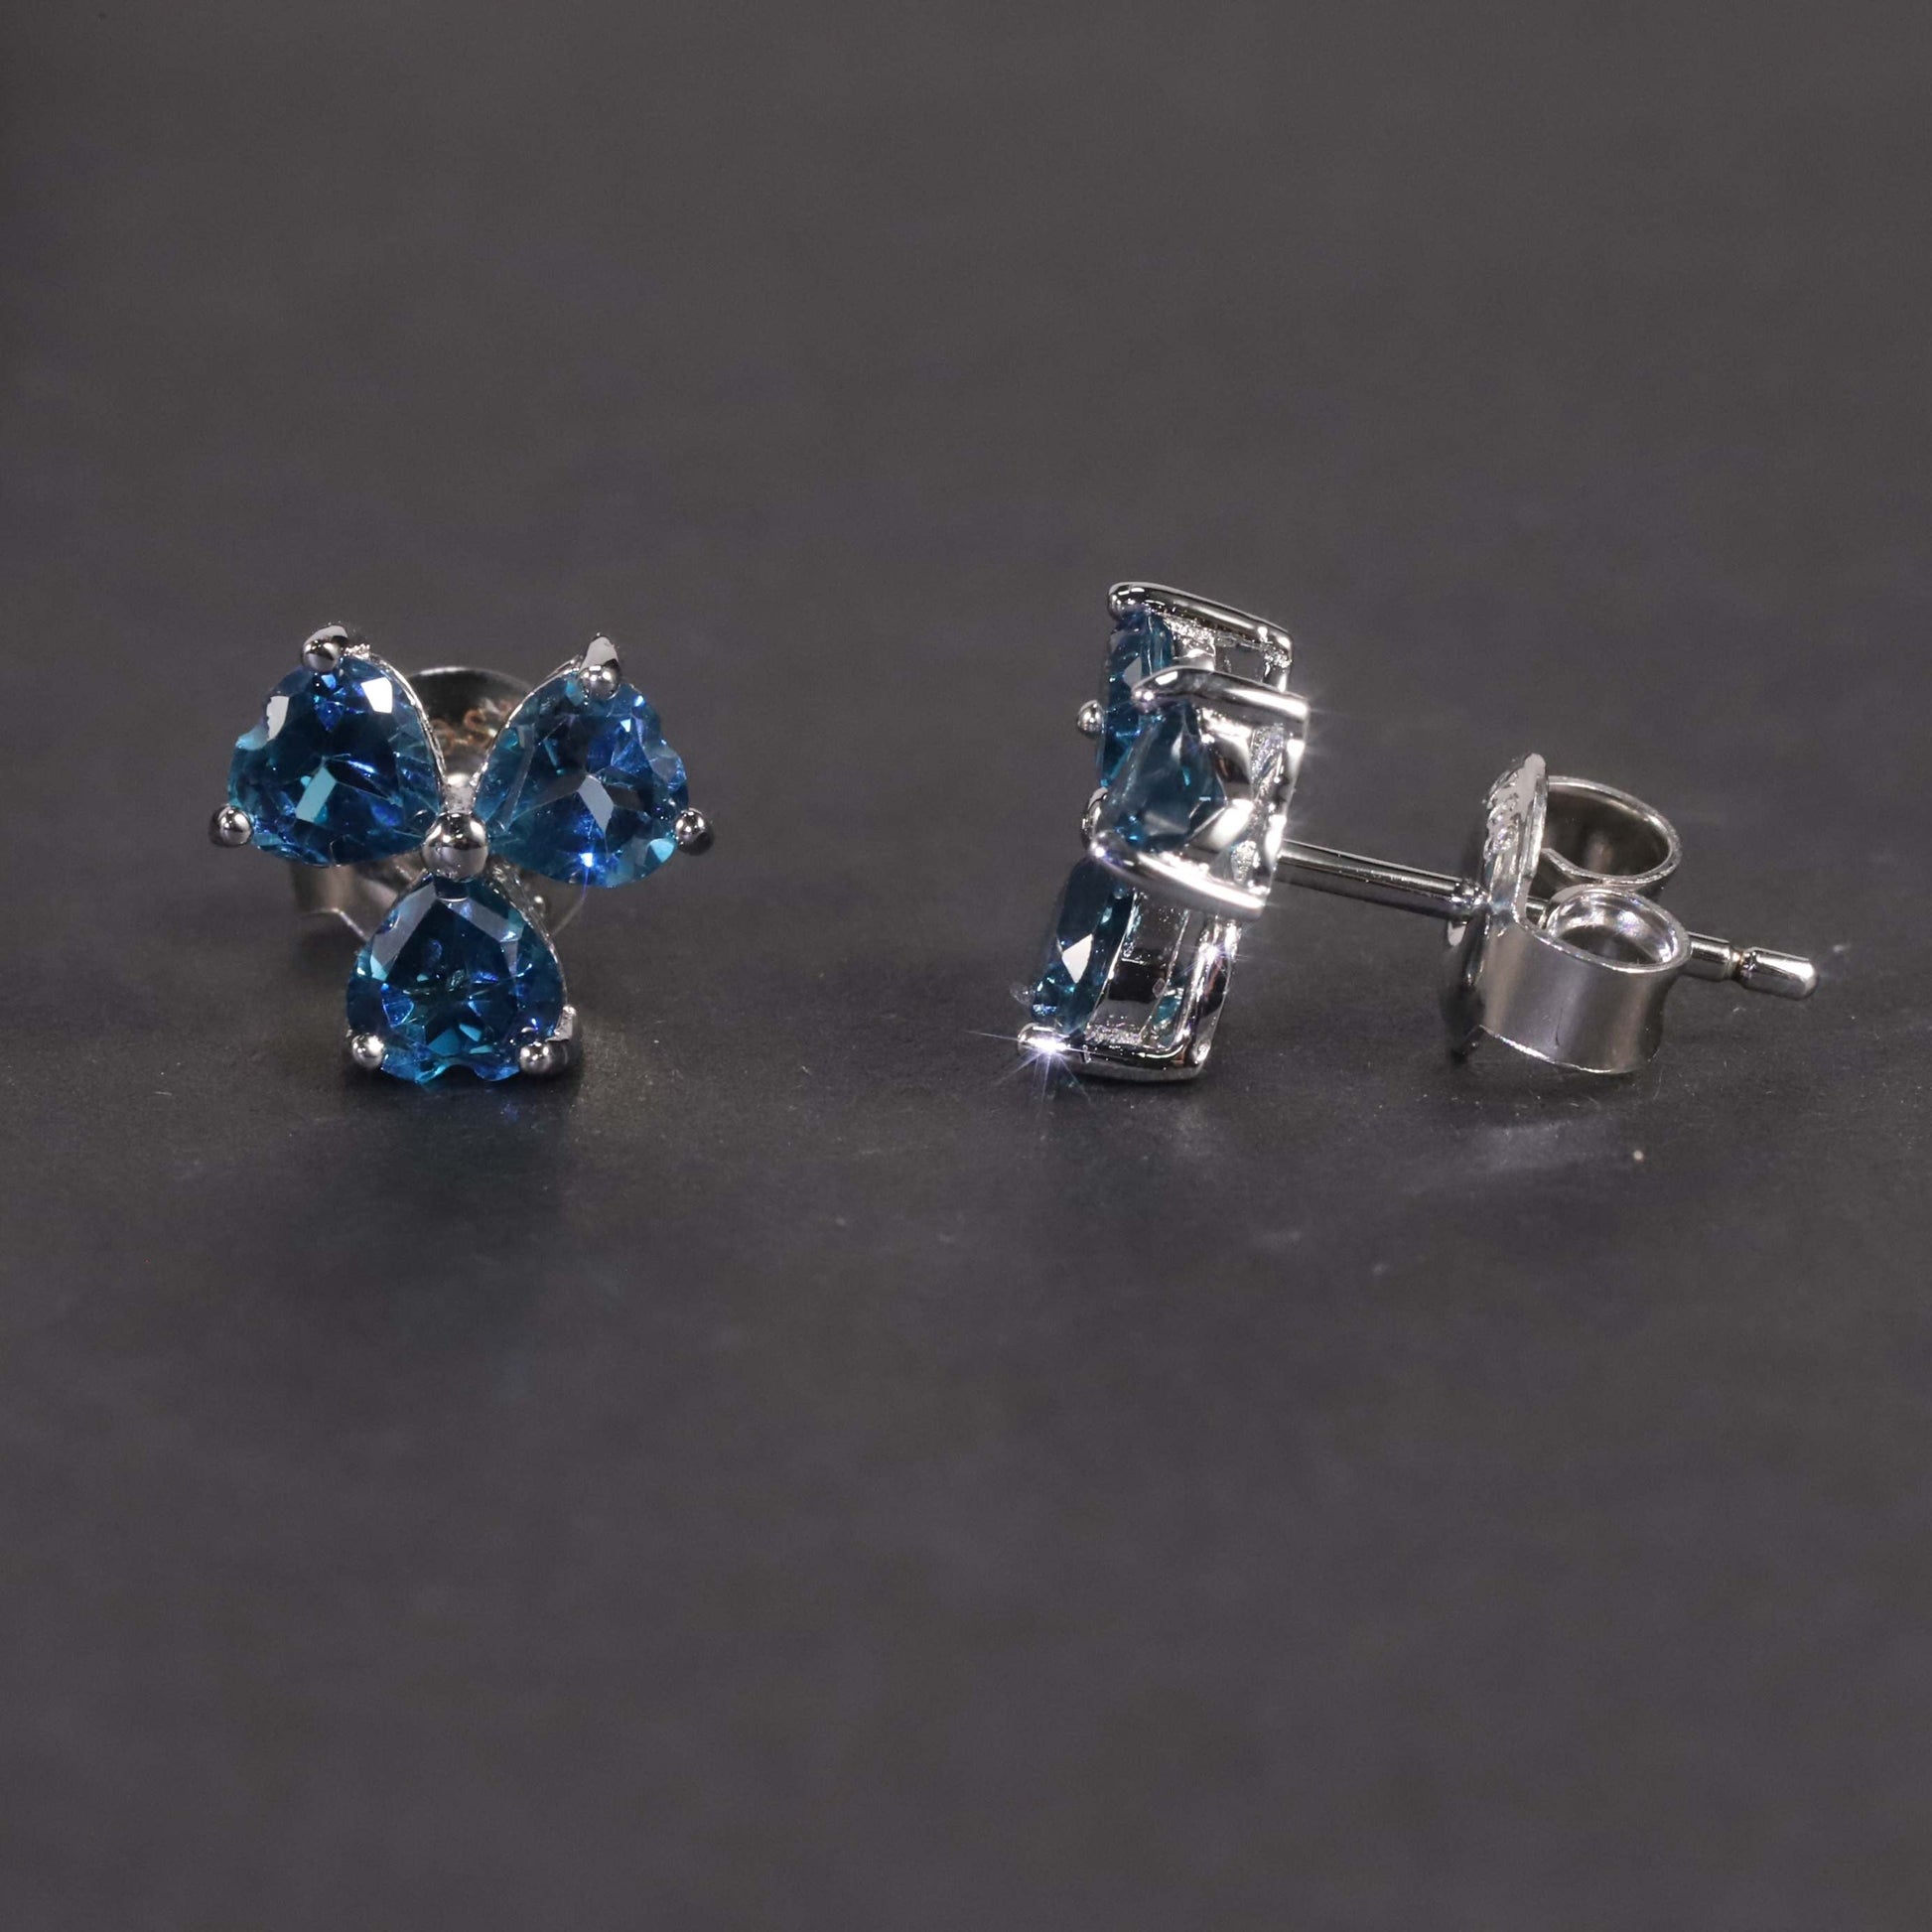 Side view on dark background of flower-shaped silver London blue topaz jewellery